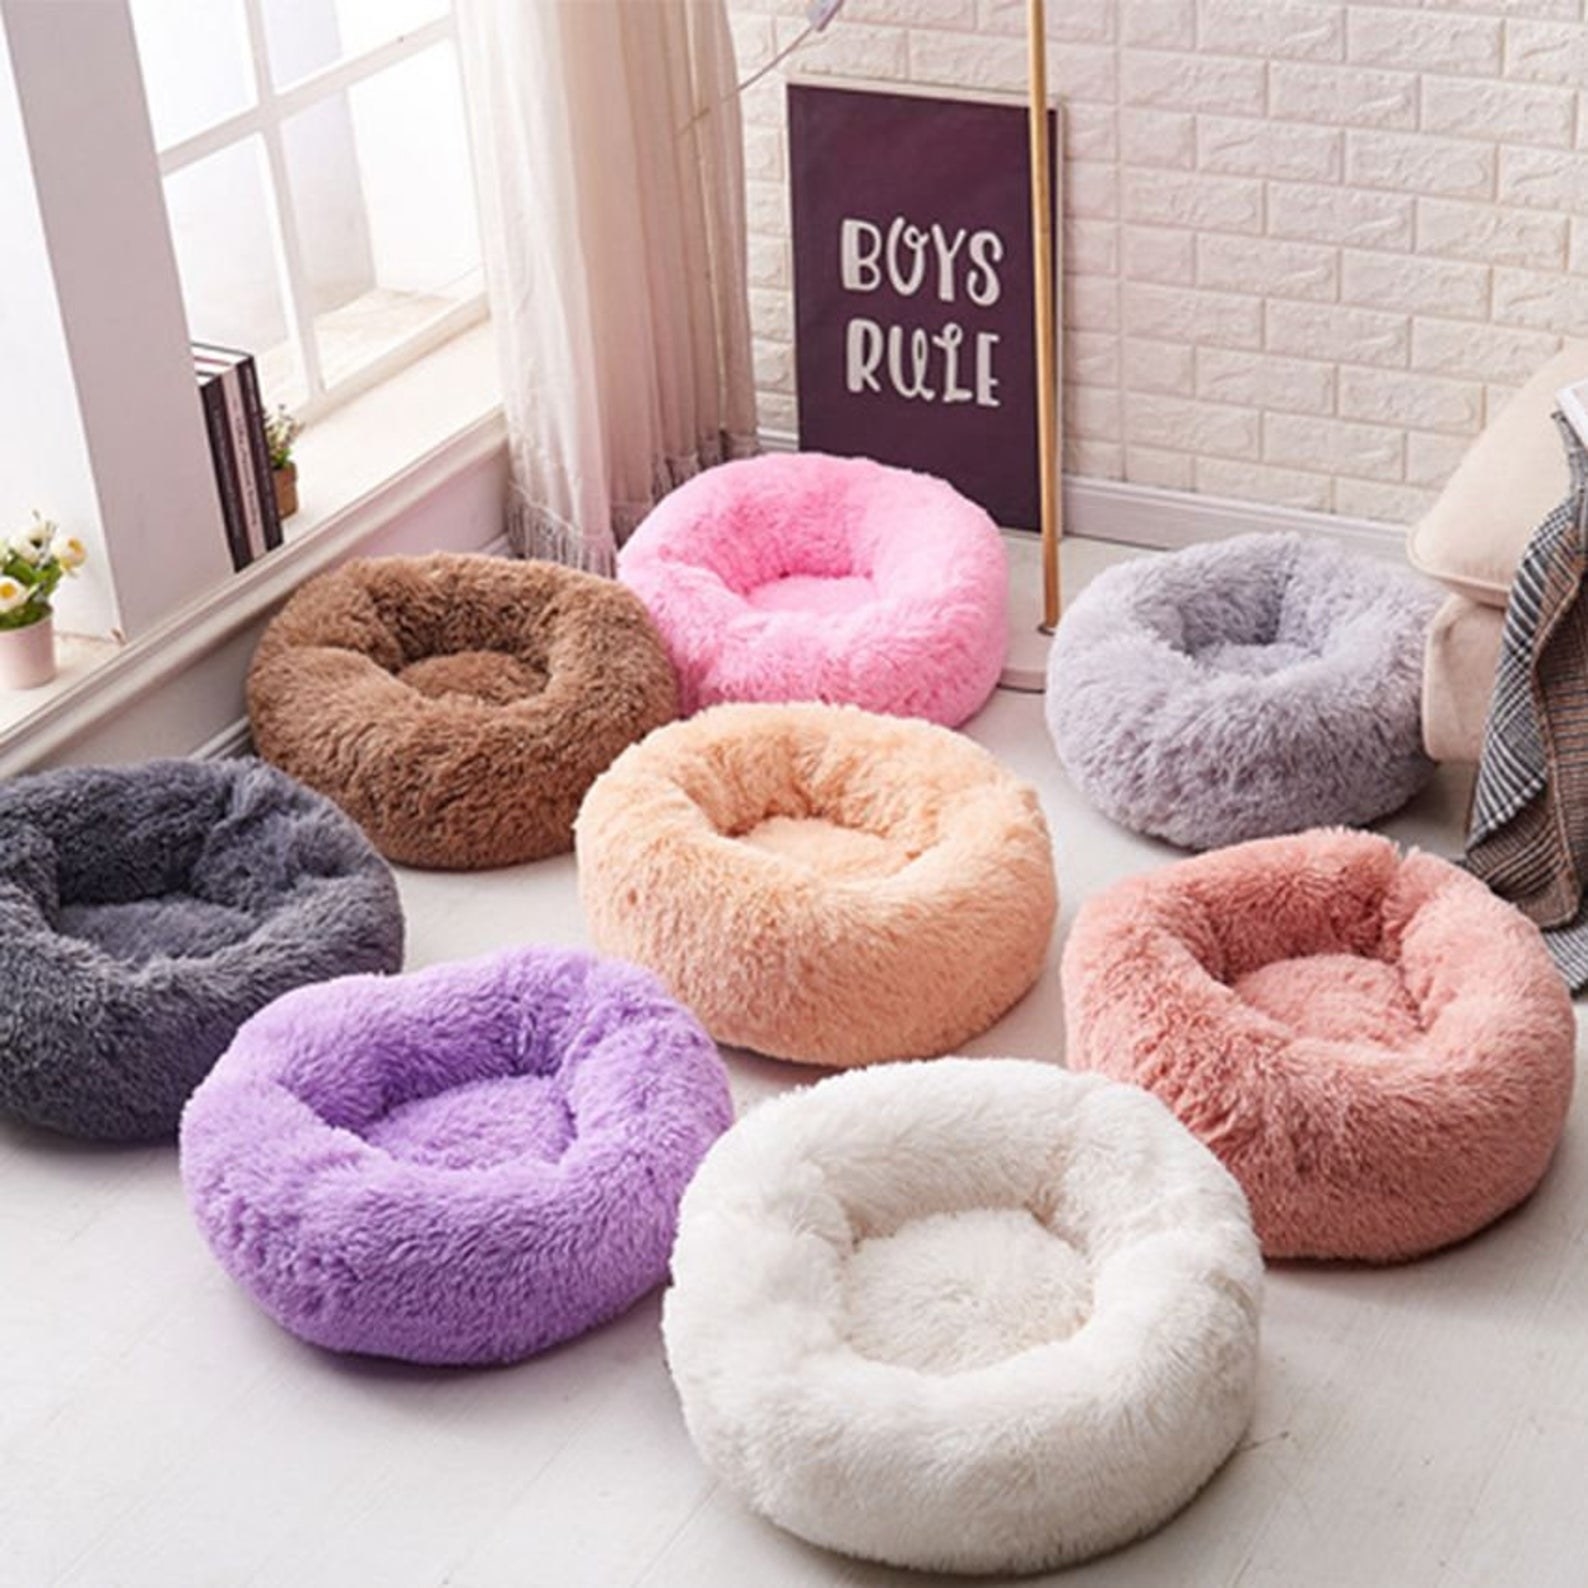 Circular, fluffy dog beds